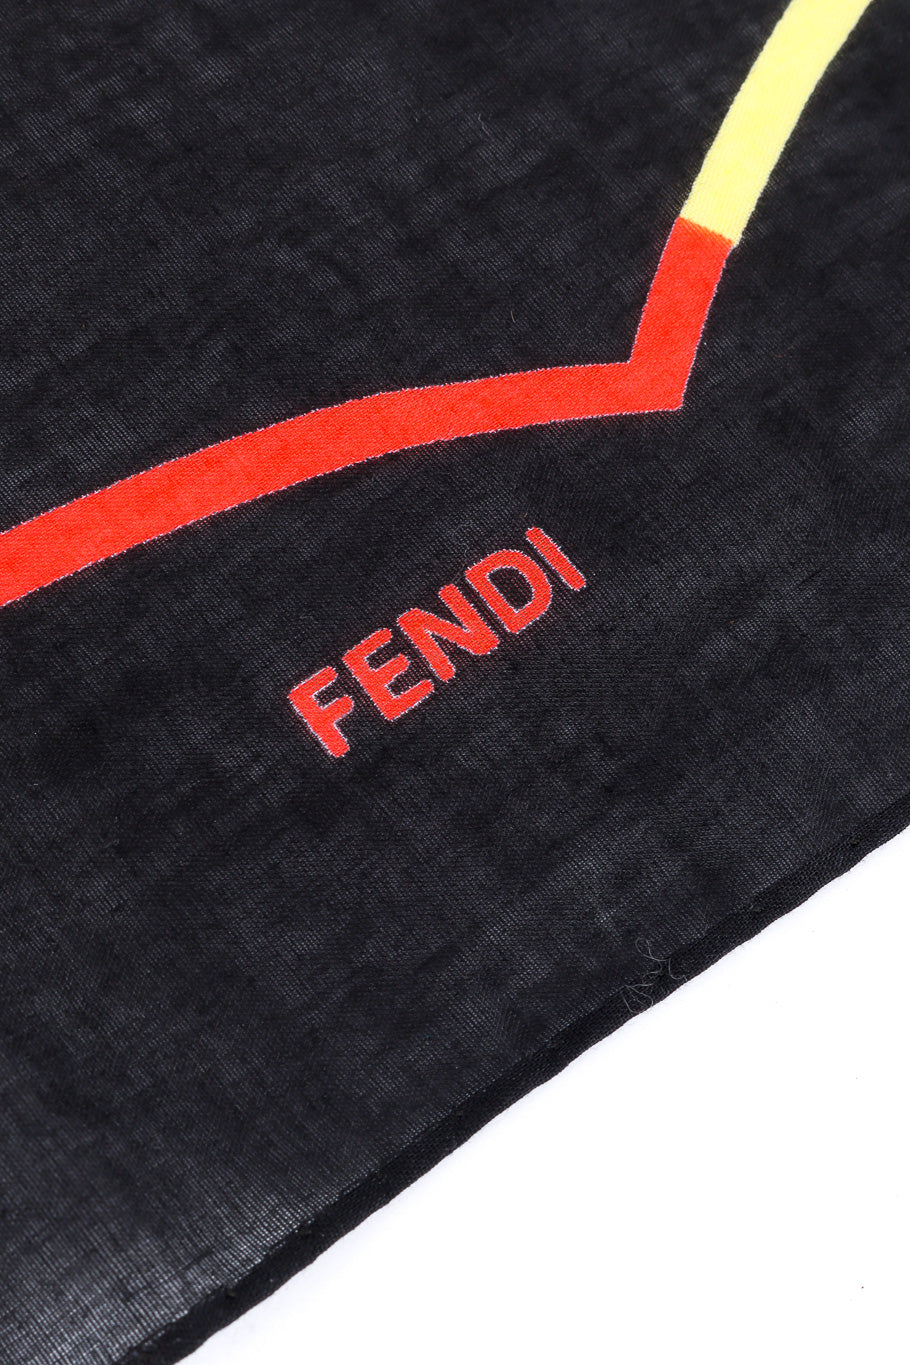 Vintage Fendi Fish Motif Cotton Scarf Fendi graphic closeup @Recessla